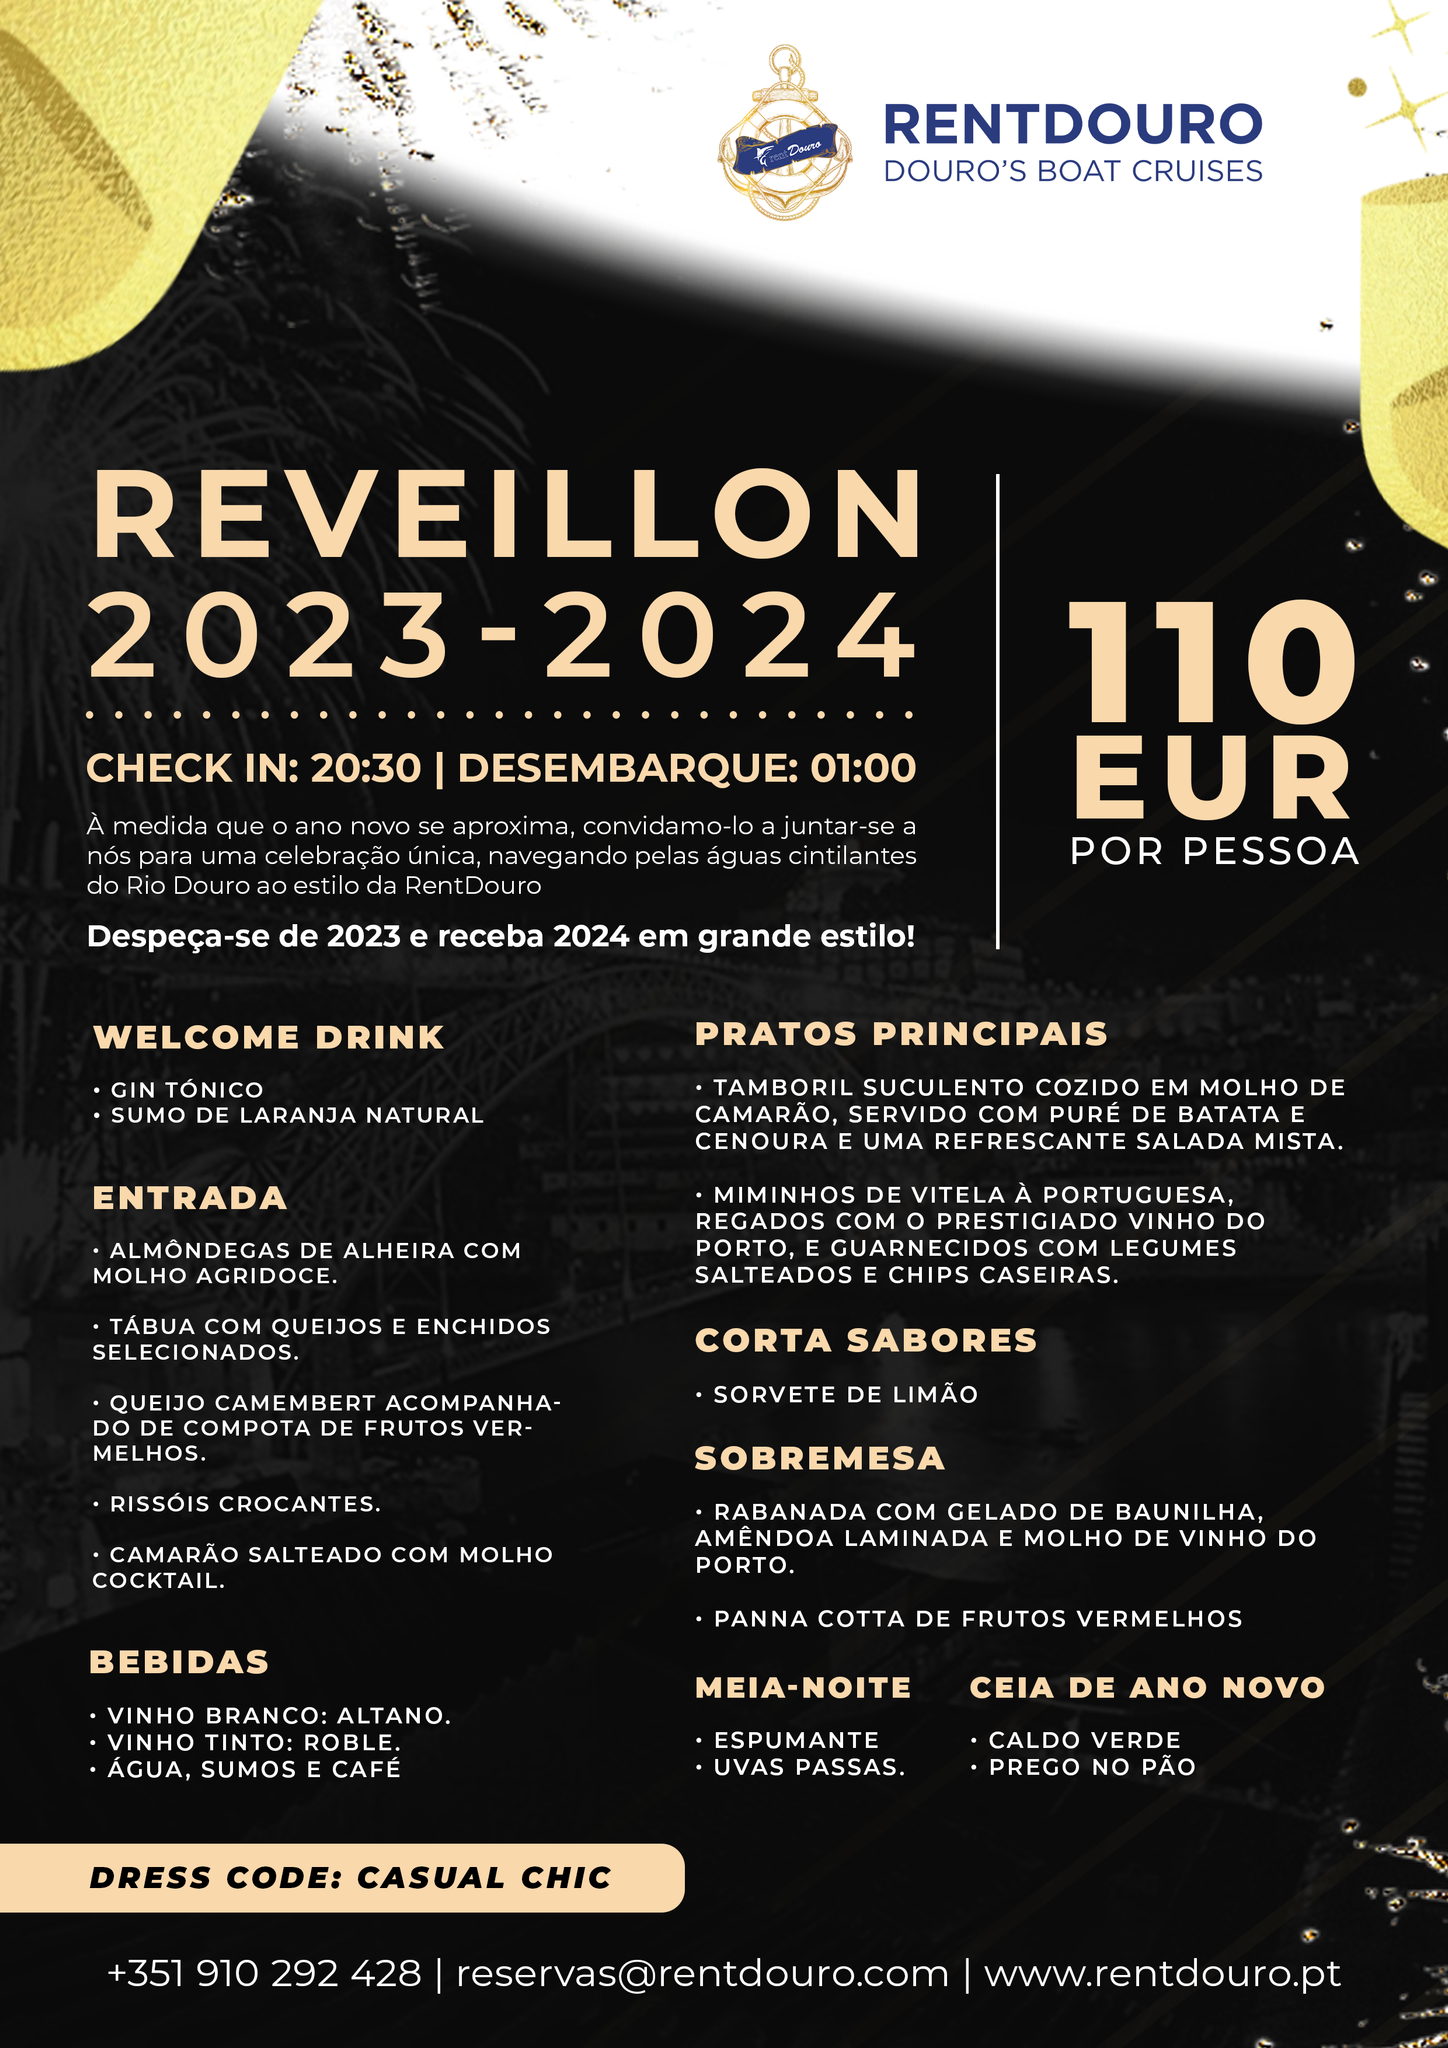 Reveillon 2023-2024 - ESGOTADO